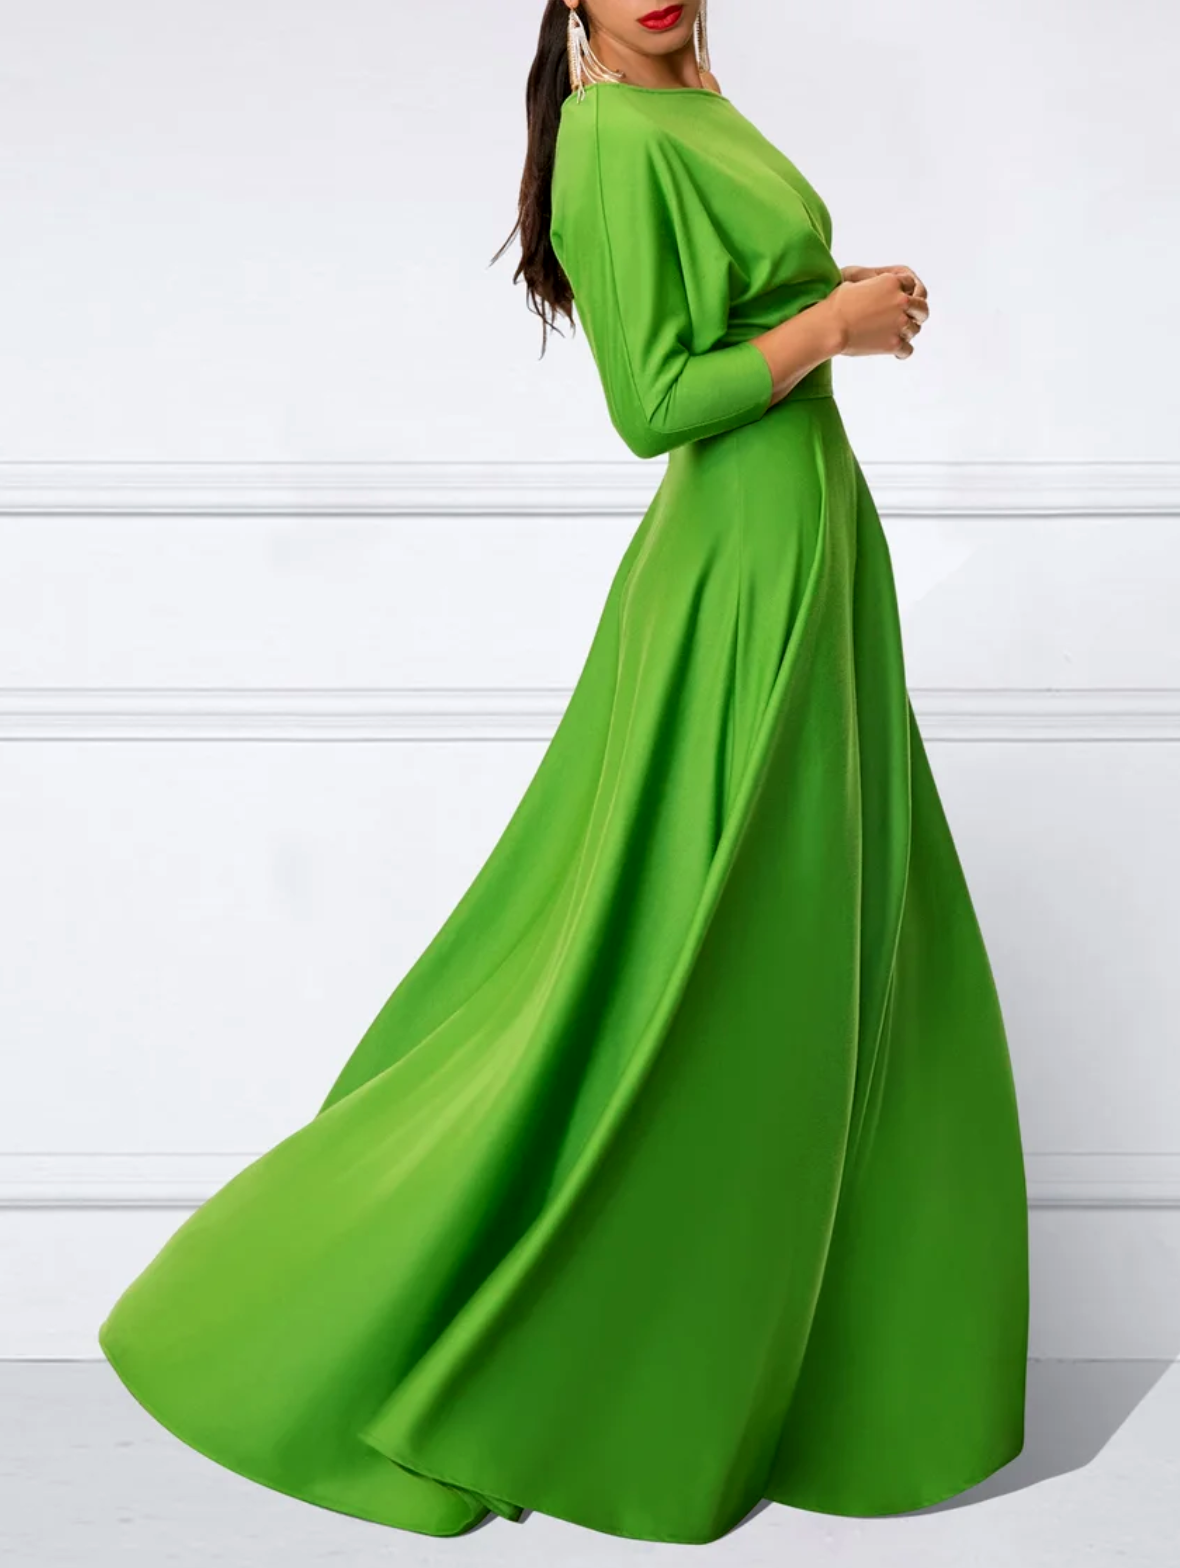 xakxx Loose Three-Quarter Sleeves Solid Color Off-The-Shoulder Maxi Dresses